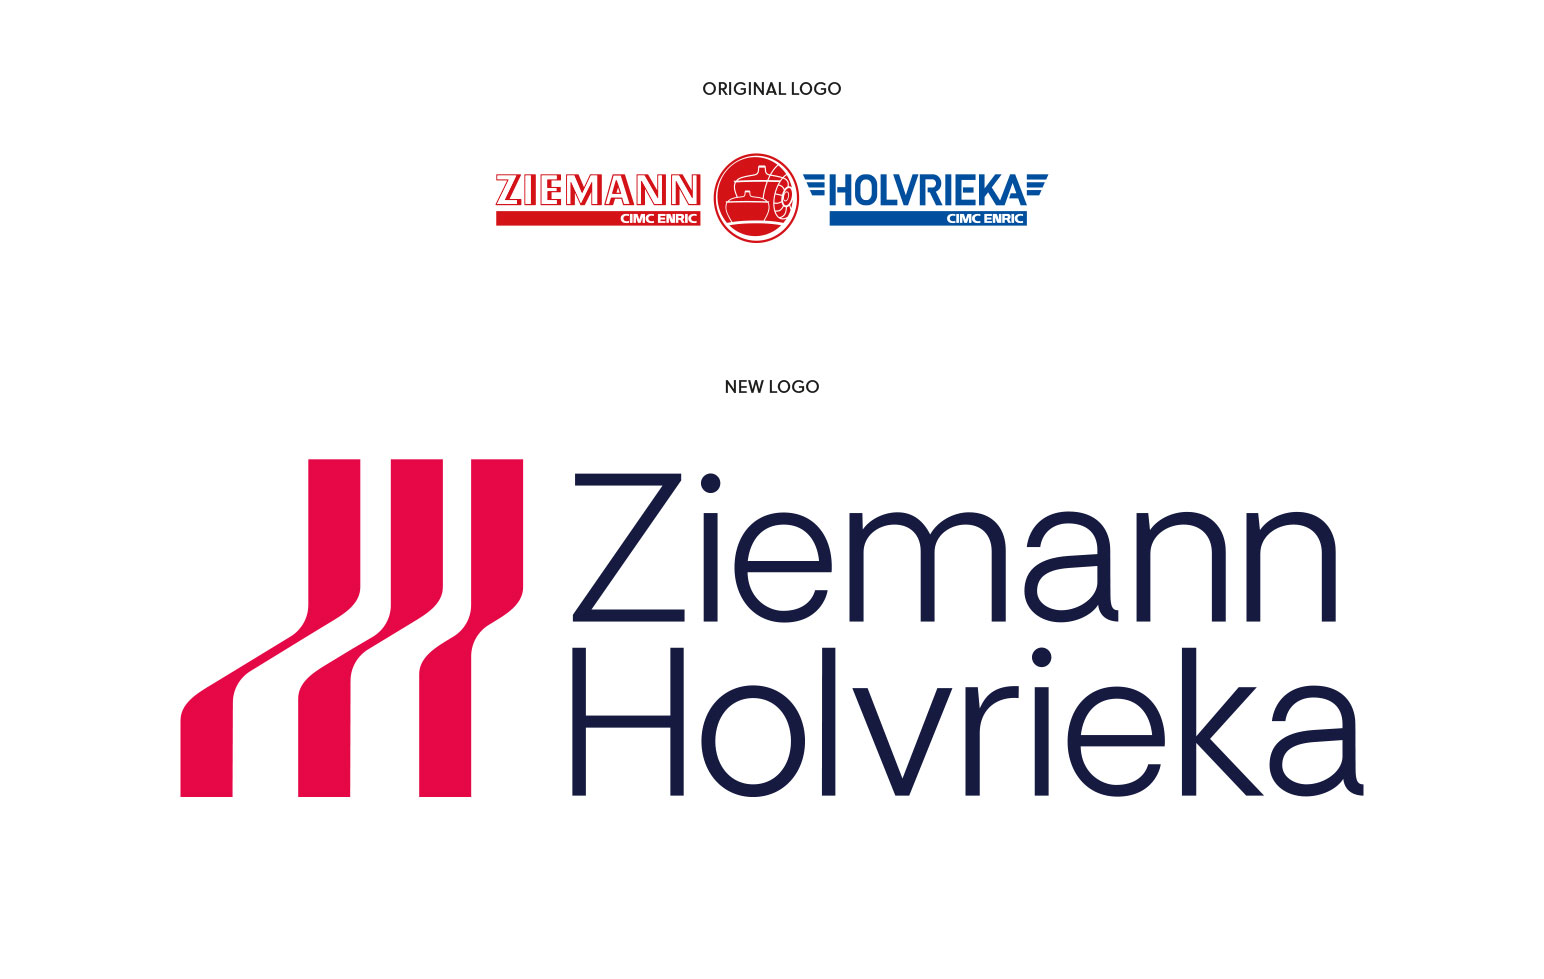 Ziemann Holvrieka new logo vs old by Crush Design